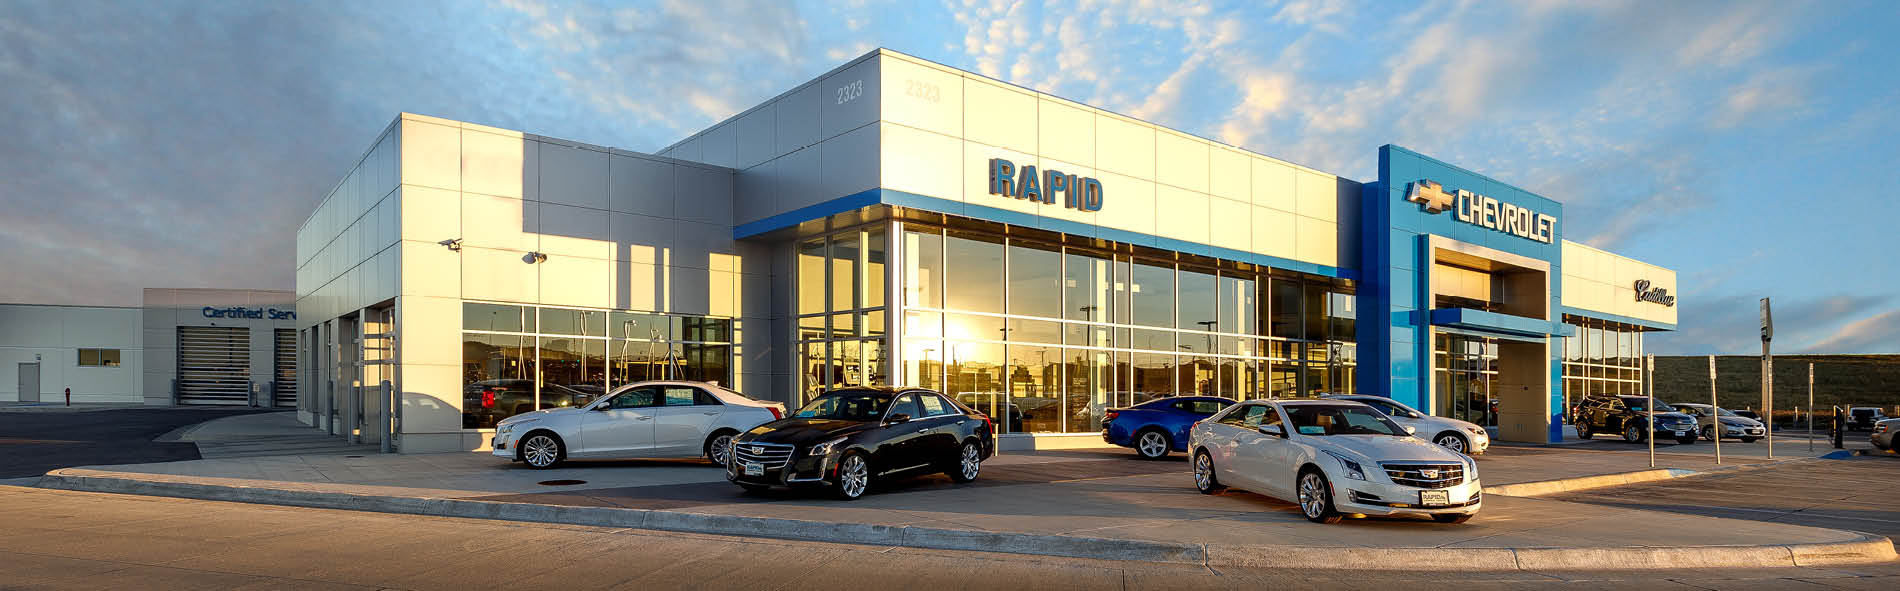 Rapid Chevrolet Cadillac Dealership